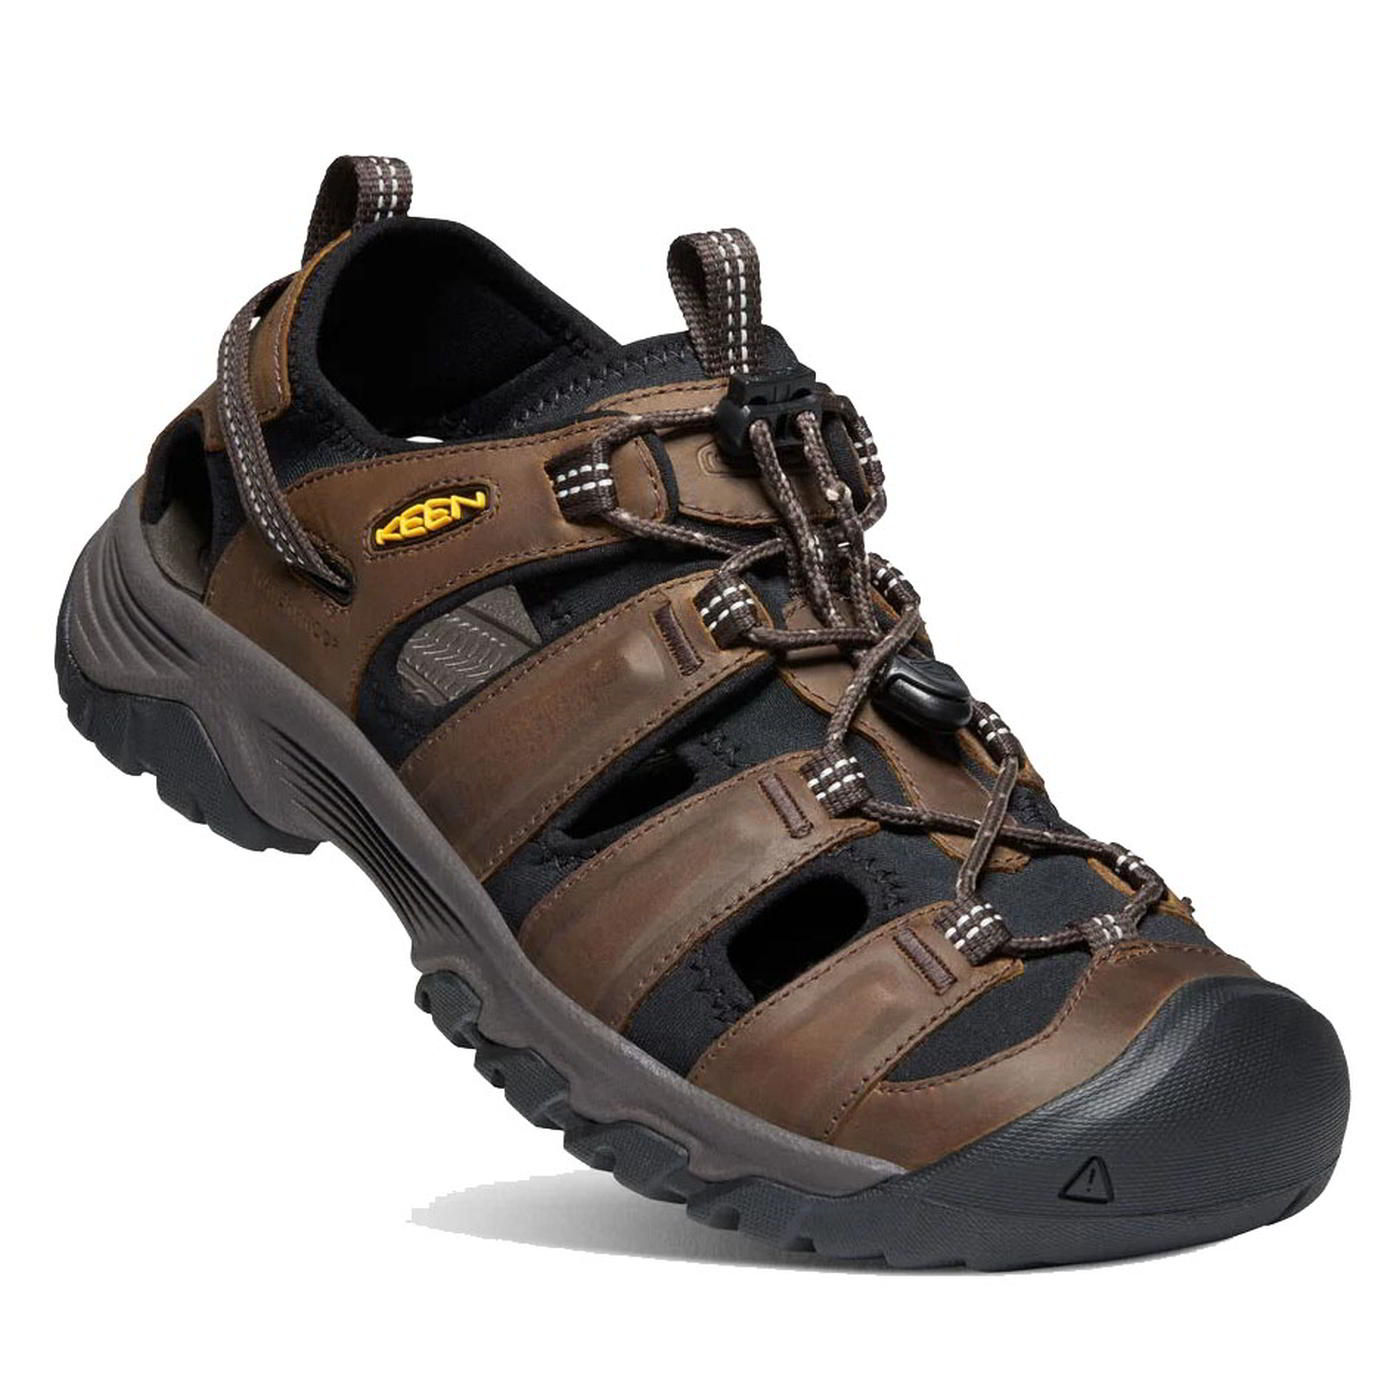 Keen Men's Targhee III Sandal Walking Hiking Shoes - UK 7 / US 8